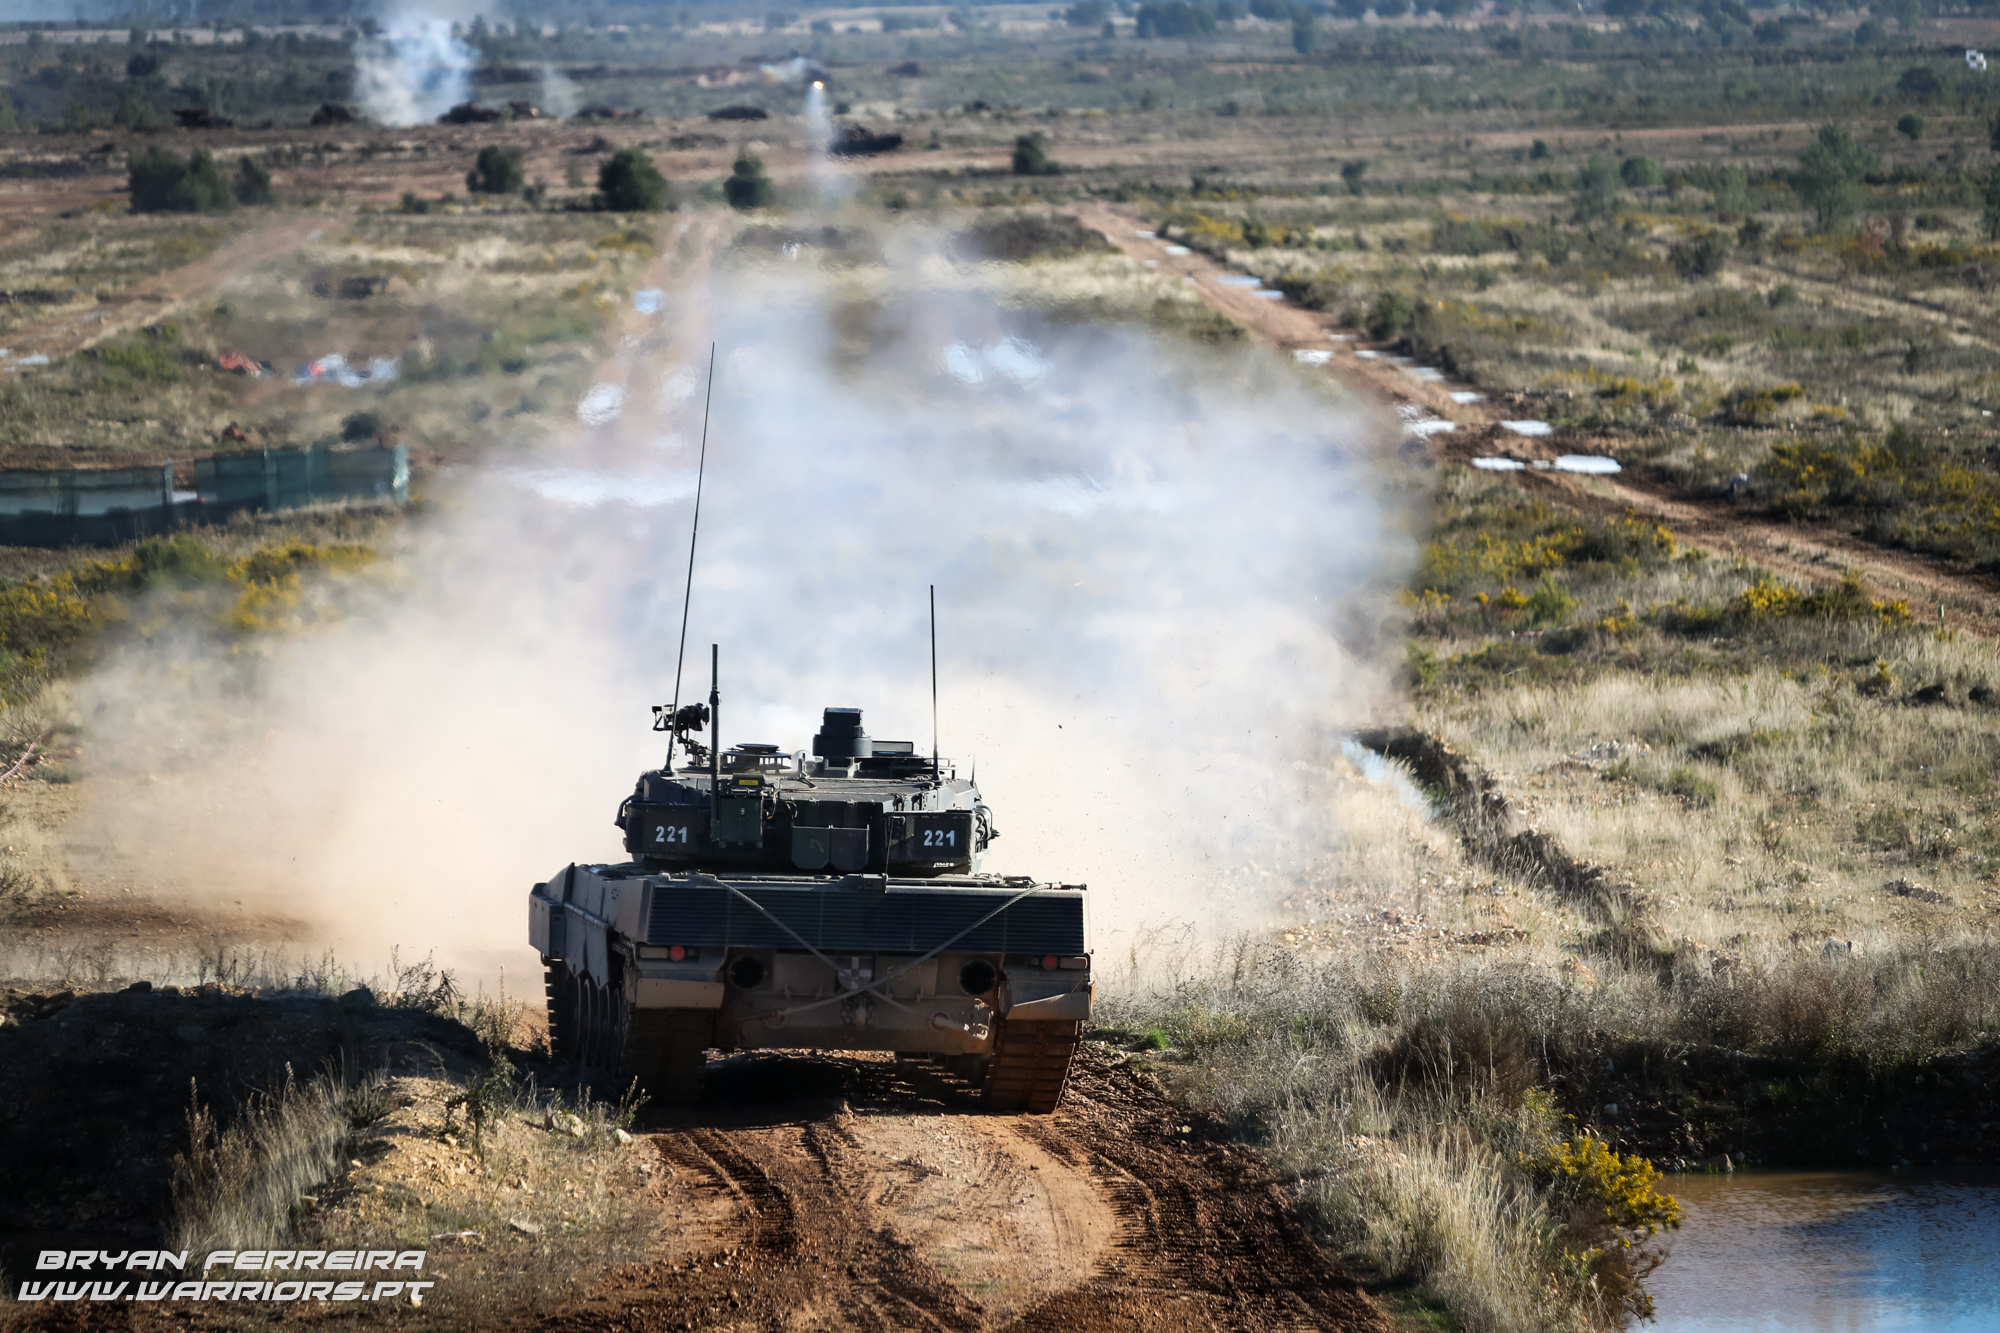 Portuguese Mechanized Brigade Leopard 2A6 Tank fires a round